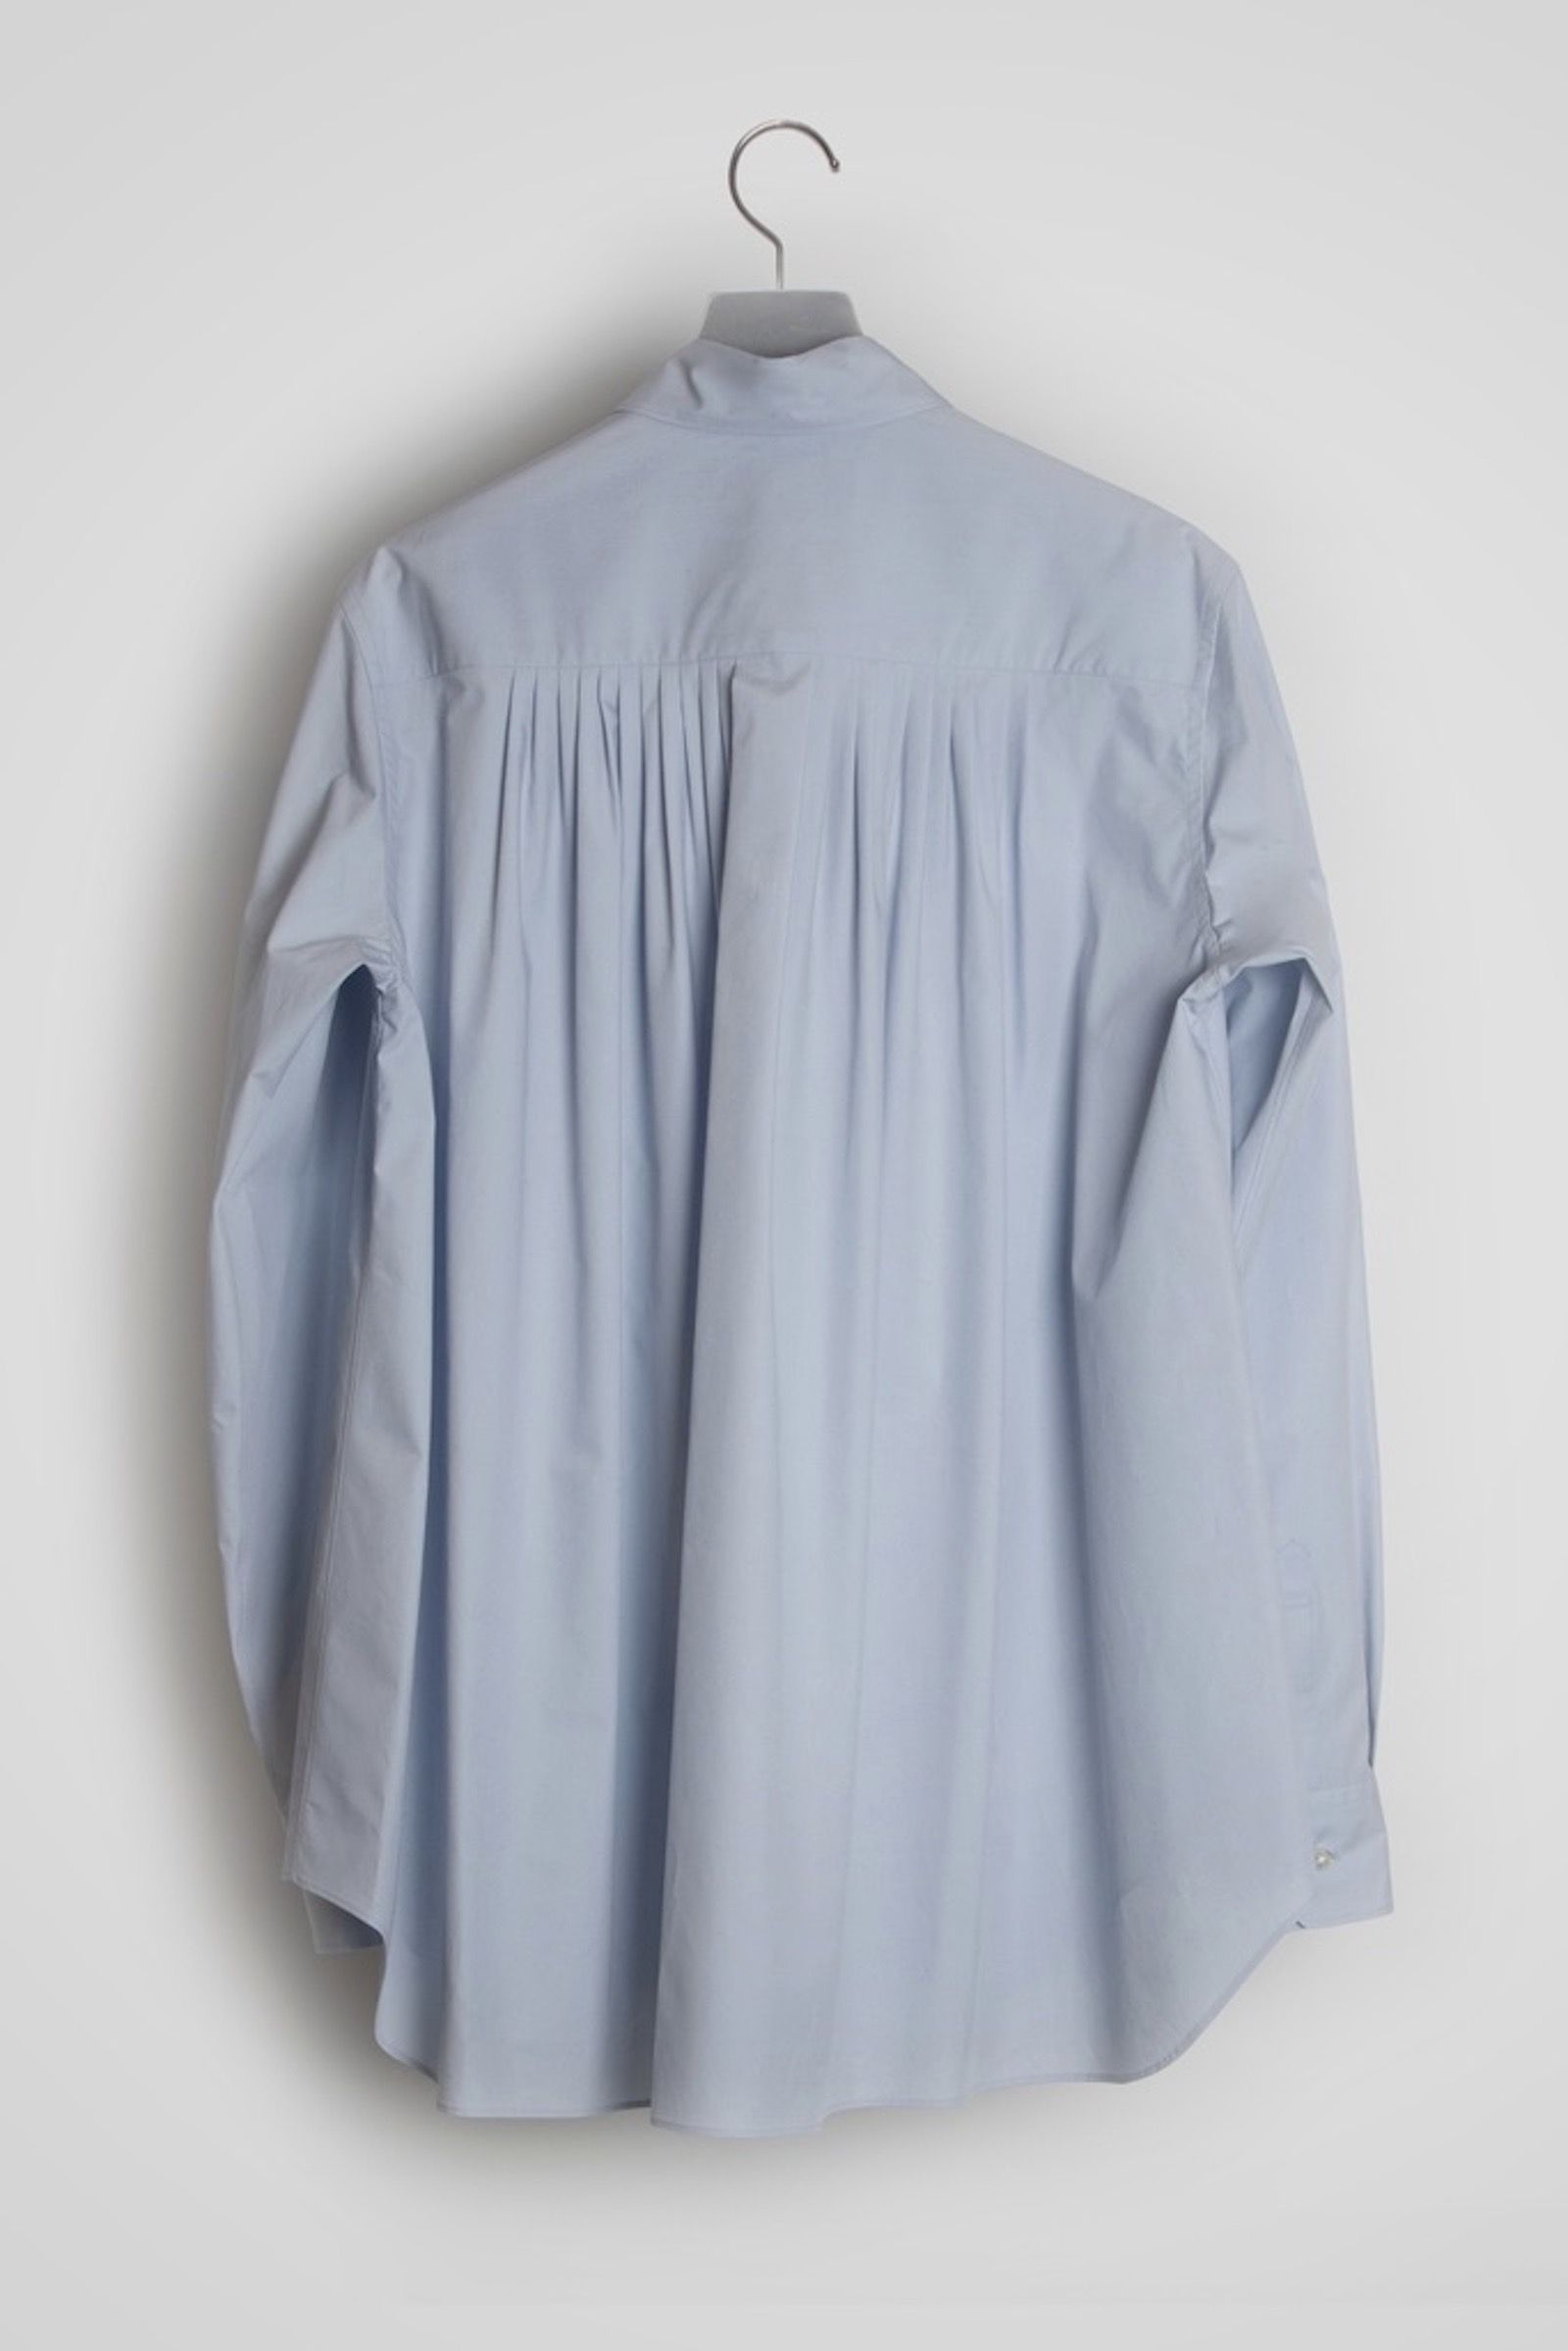 FUMITO GANRYU - pleated shirt 21aw | asterisk